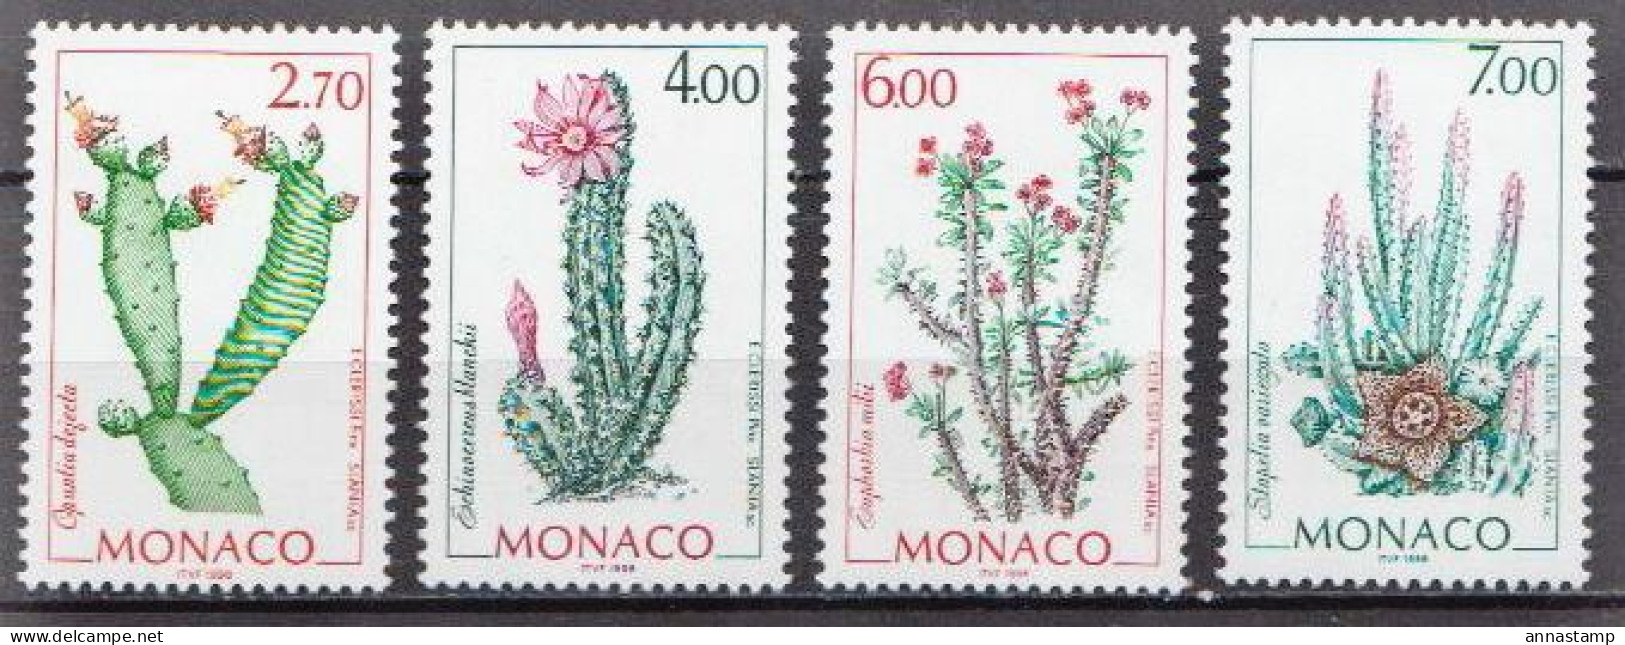 Monaco MNH Set - Cactus